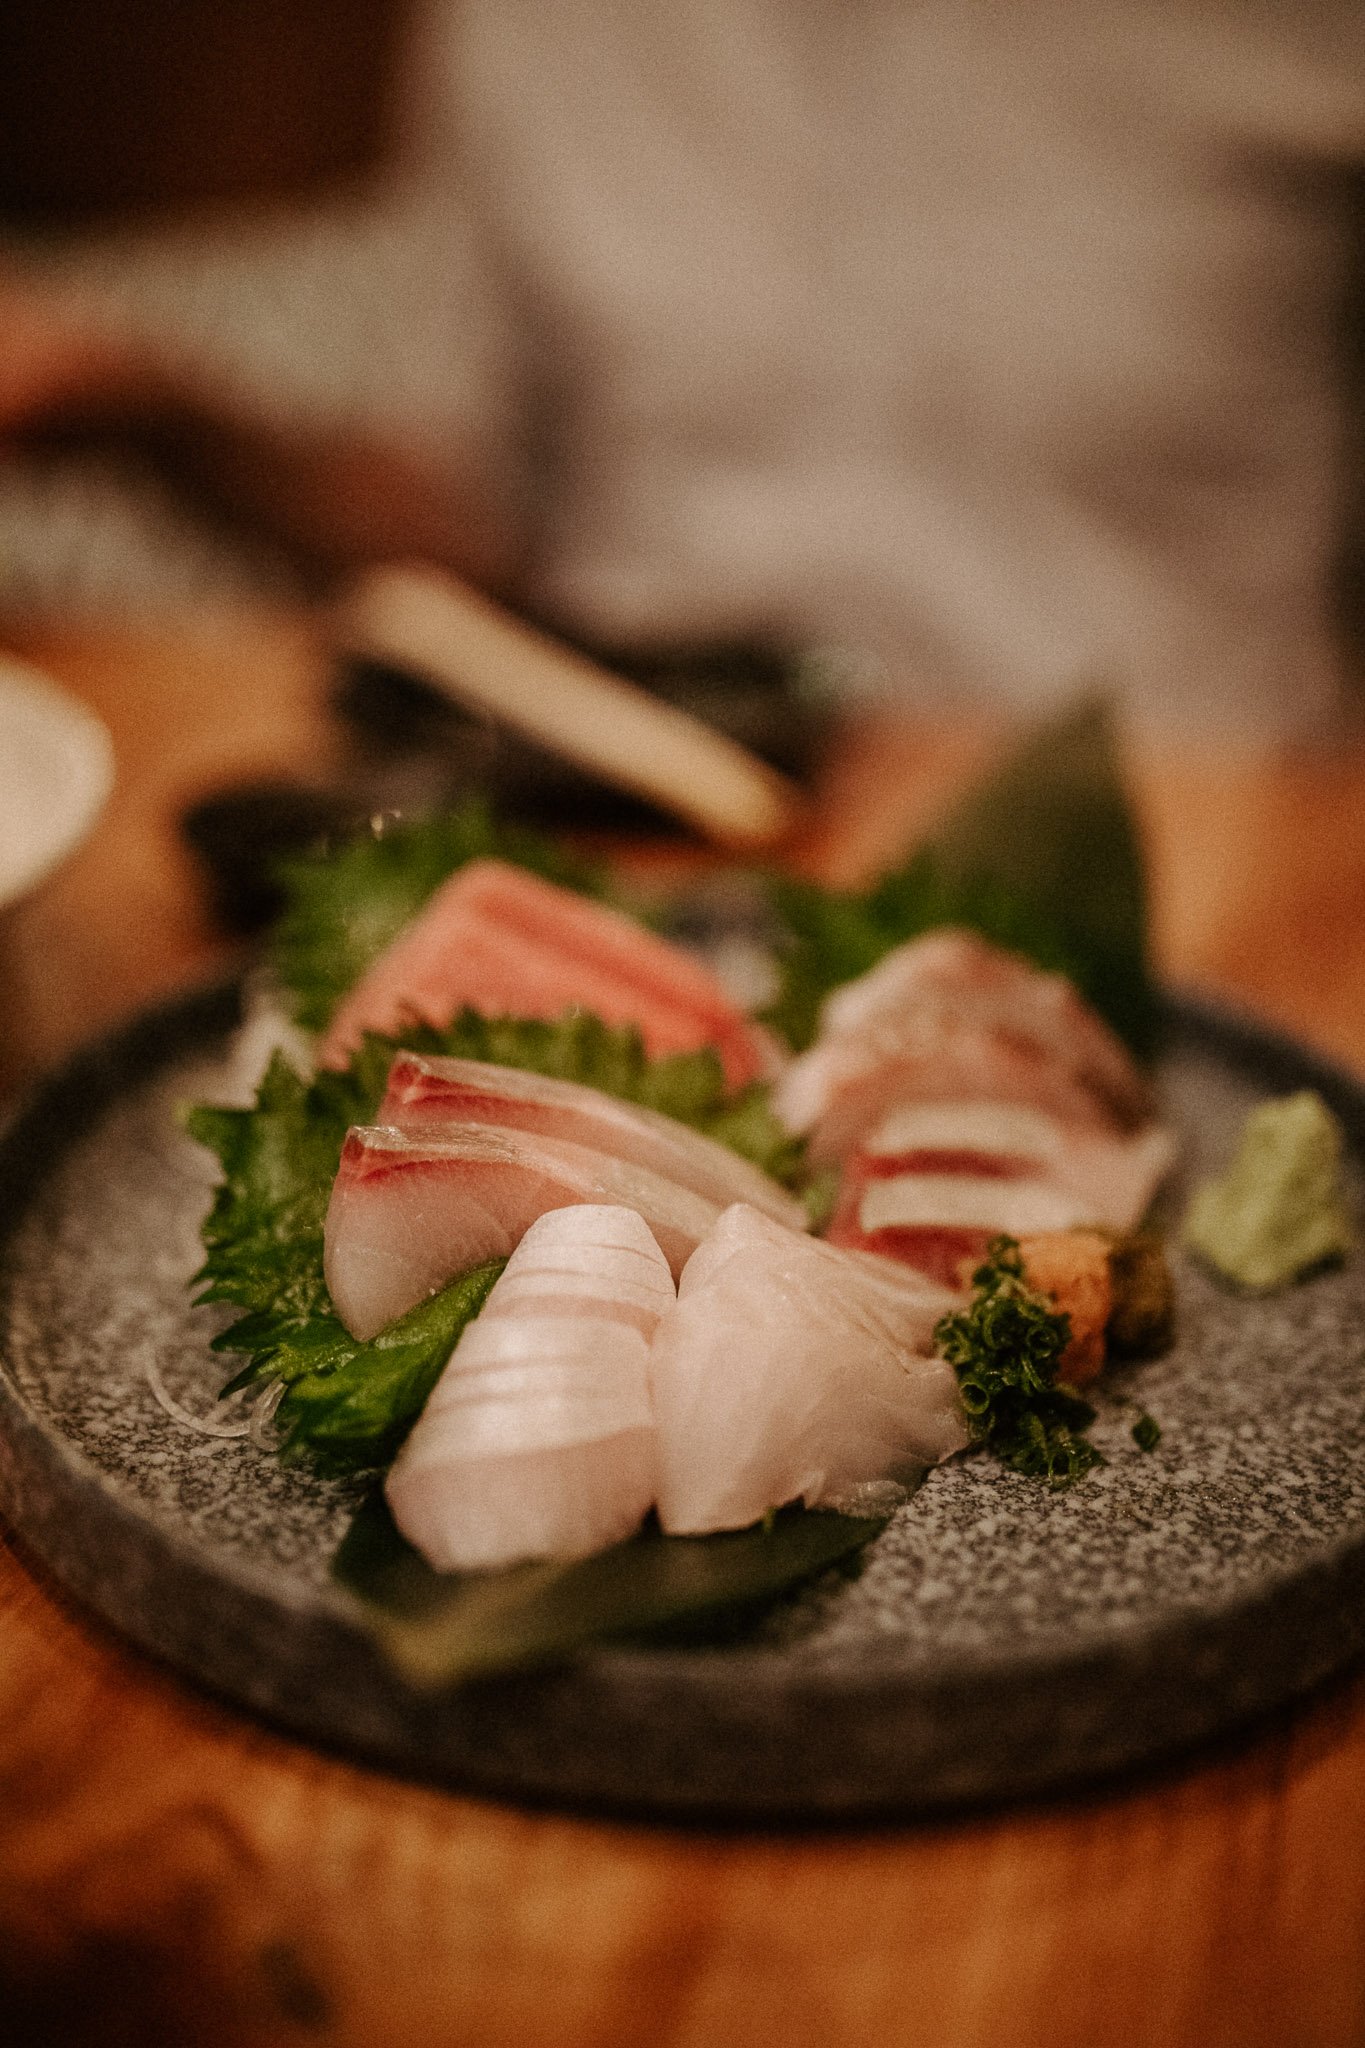 fish-and-bird-berkeley-japanese-cuisine-sashimi-2.jpg